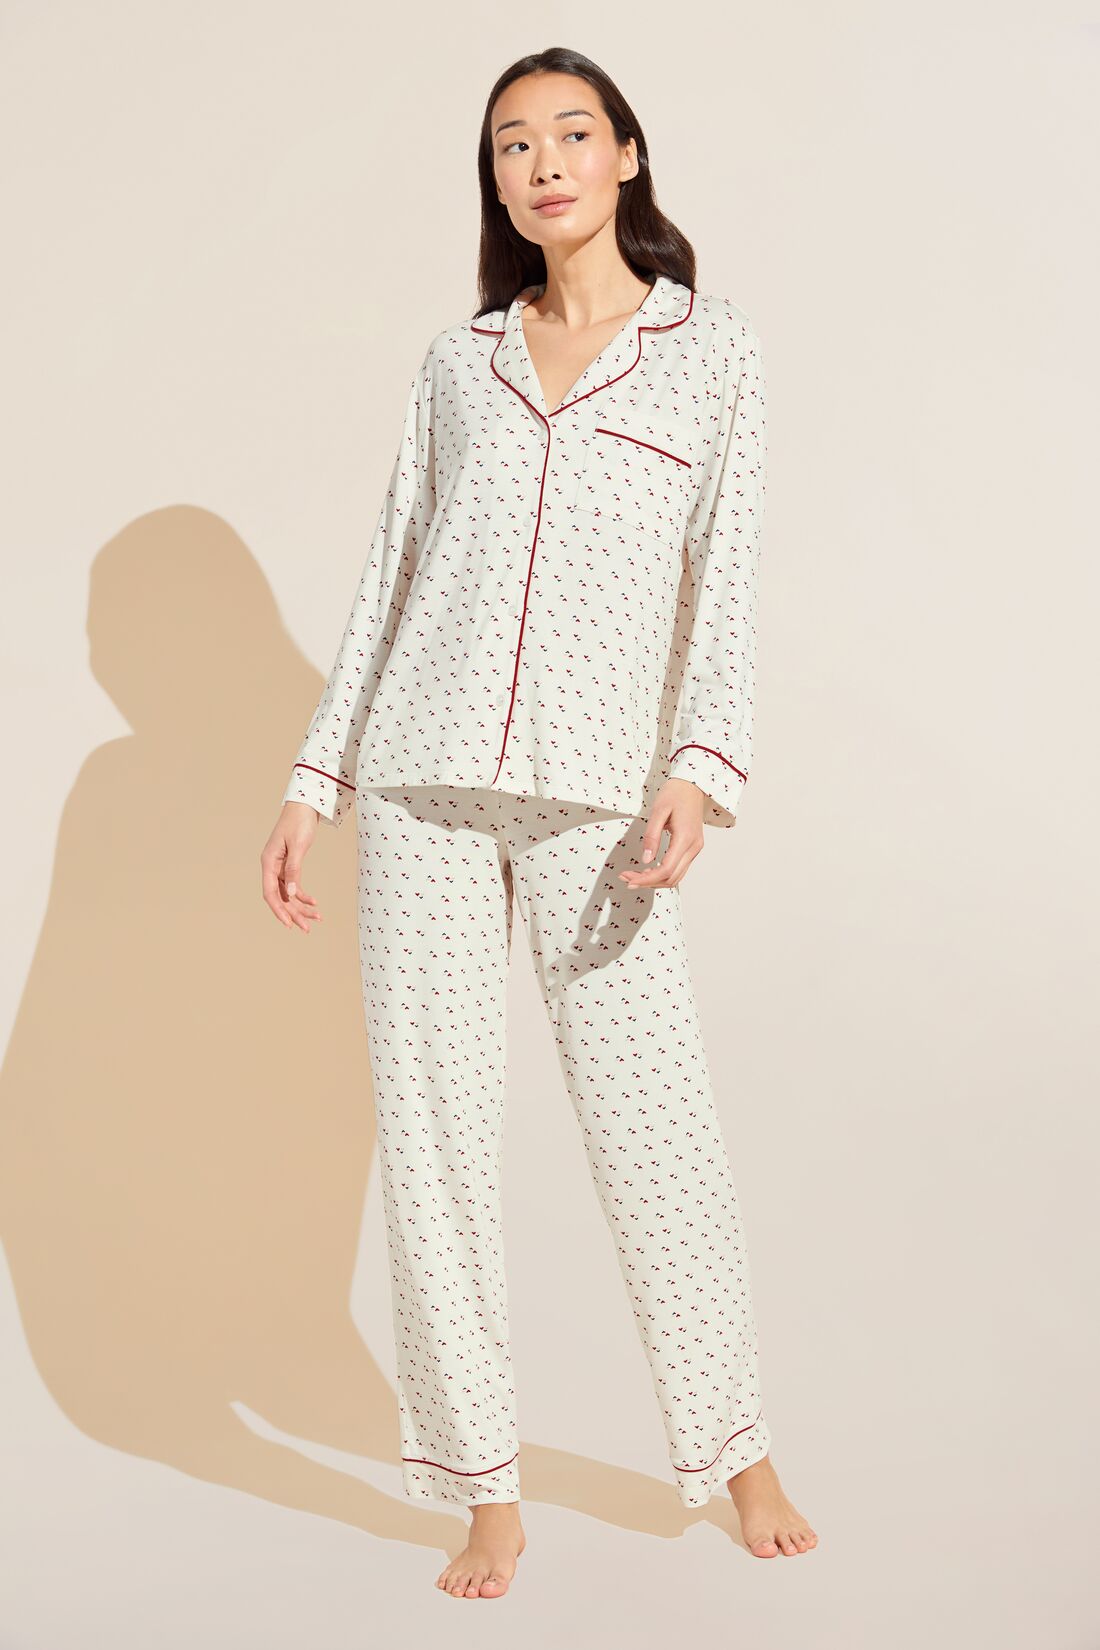 Forever 21 Women's Heart Print Shirt & Short Pajama Set in Ivory